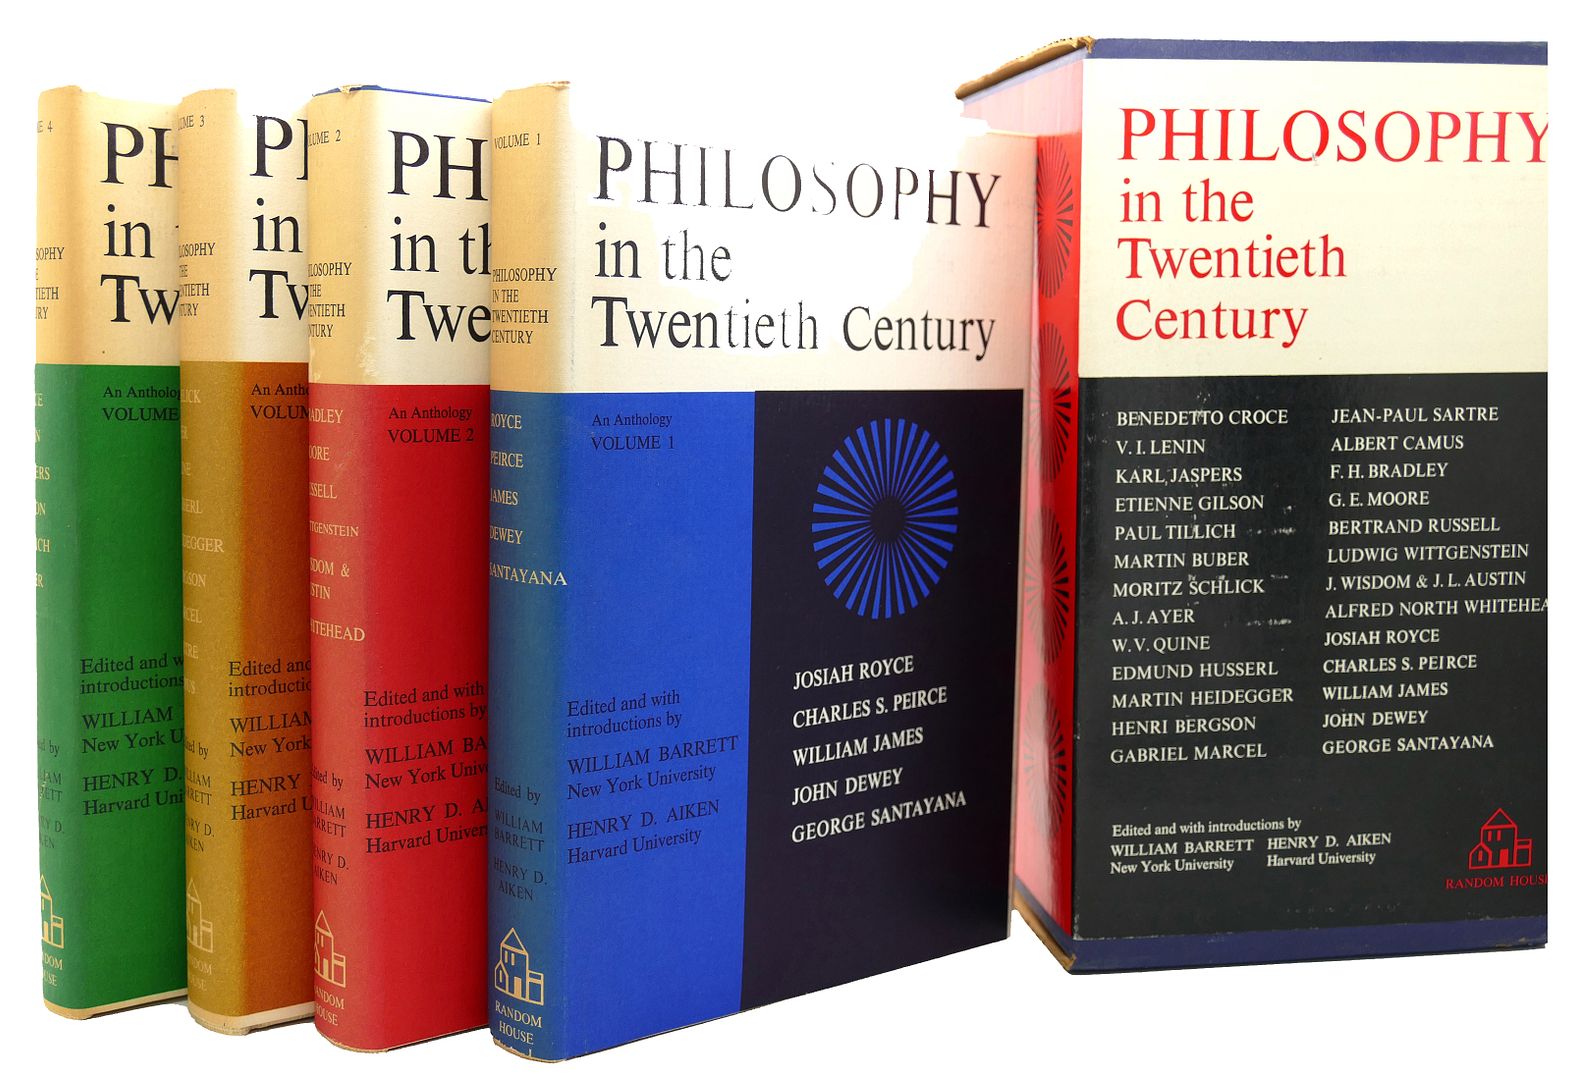 WILLAIM BARRETT AND HENRY D. AIKEN - Philosophy in the Twentieth Century an Anthology 4 Vols.